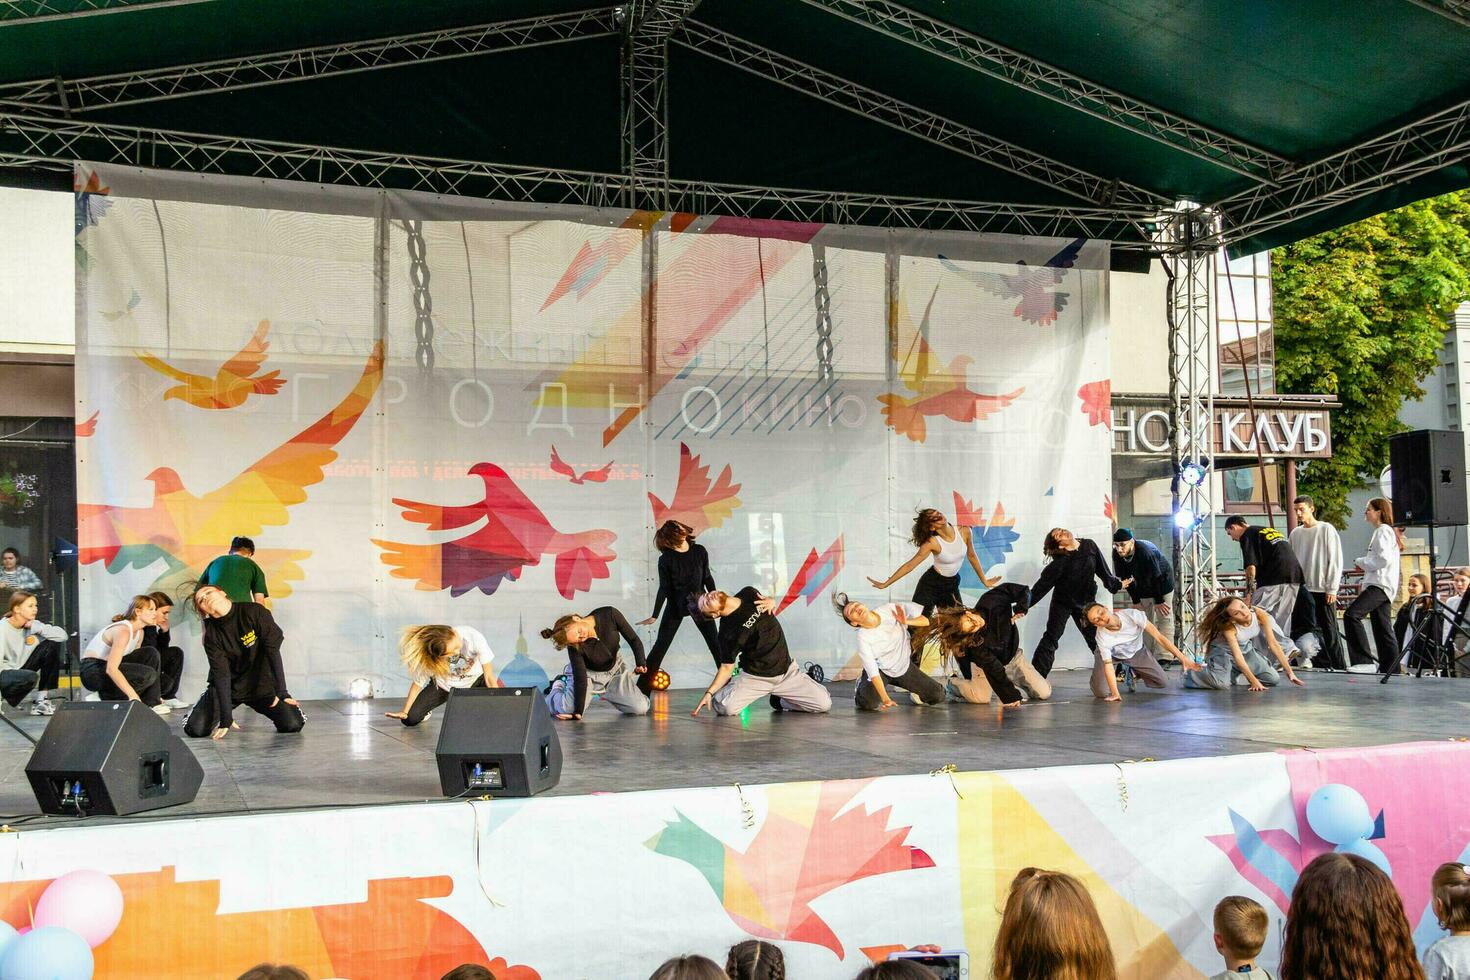 grodno, Vitryssland - september 03, 2022 ungdom Centrum grodno, gata pro100 dansa, dansa festival med de deltagande av koreografiska grupper av annorlunda genrer. foto